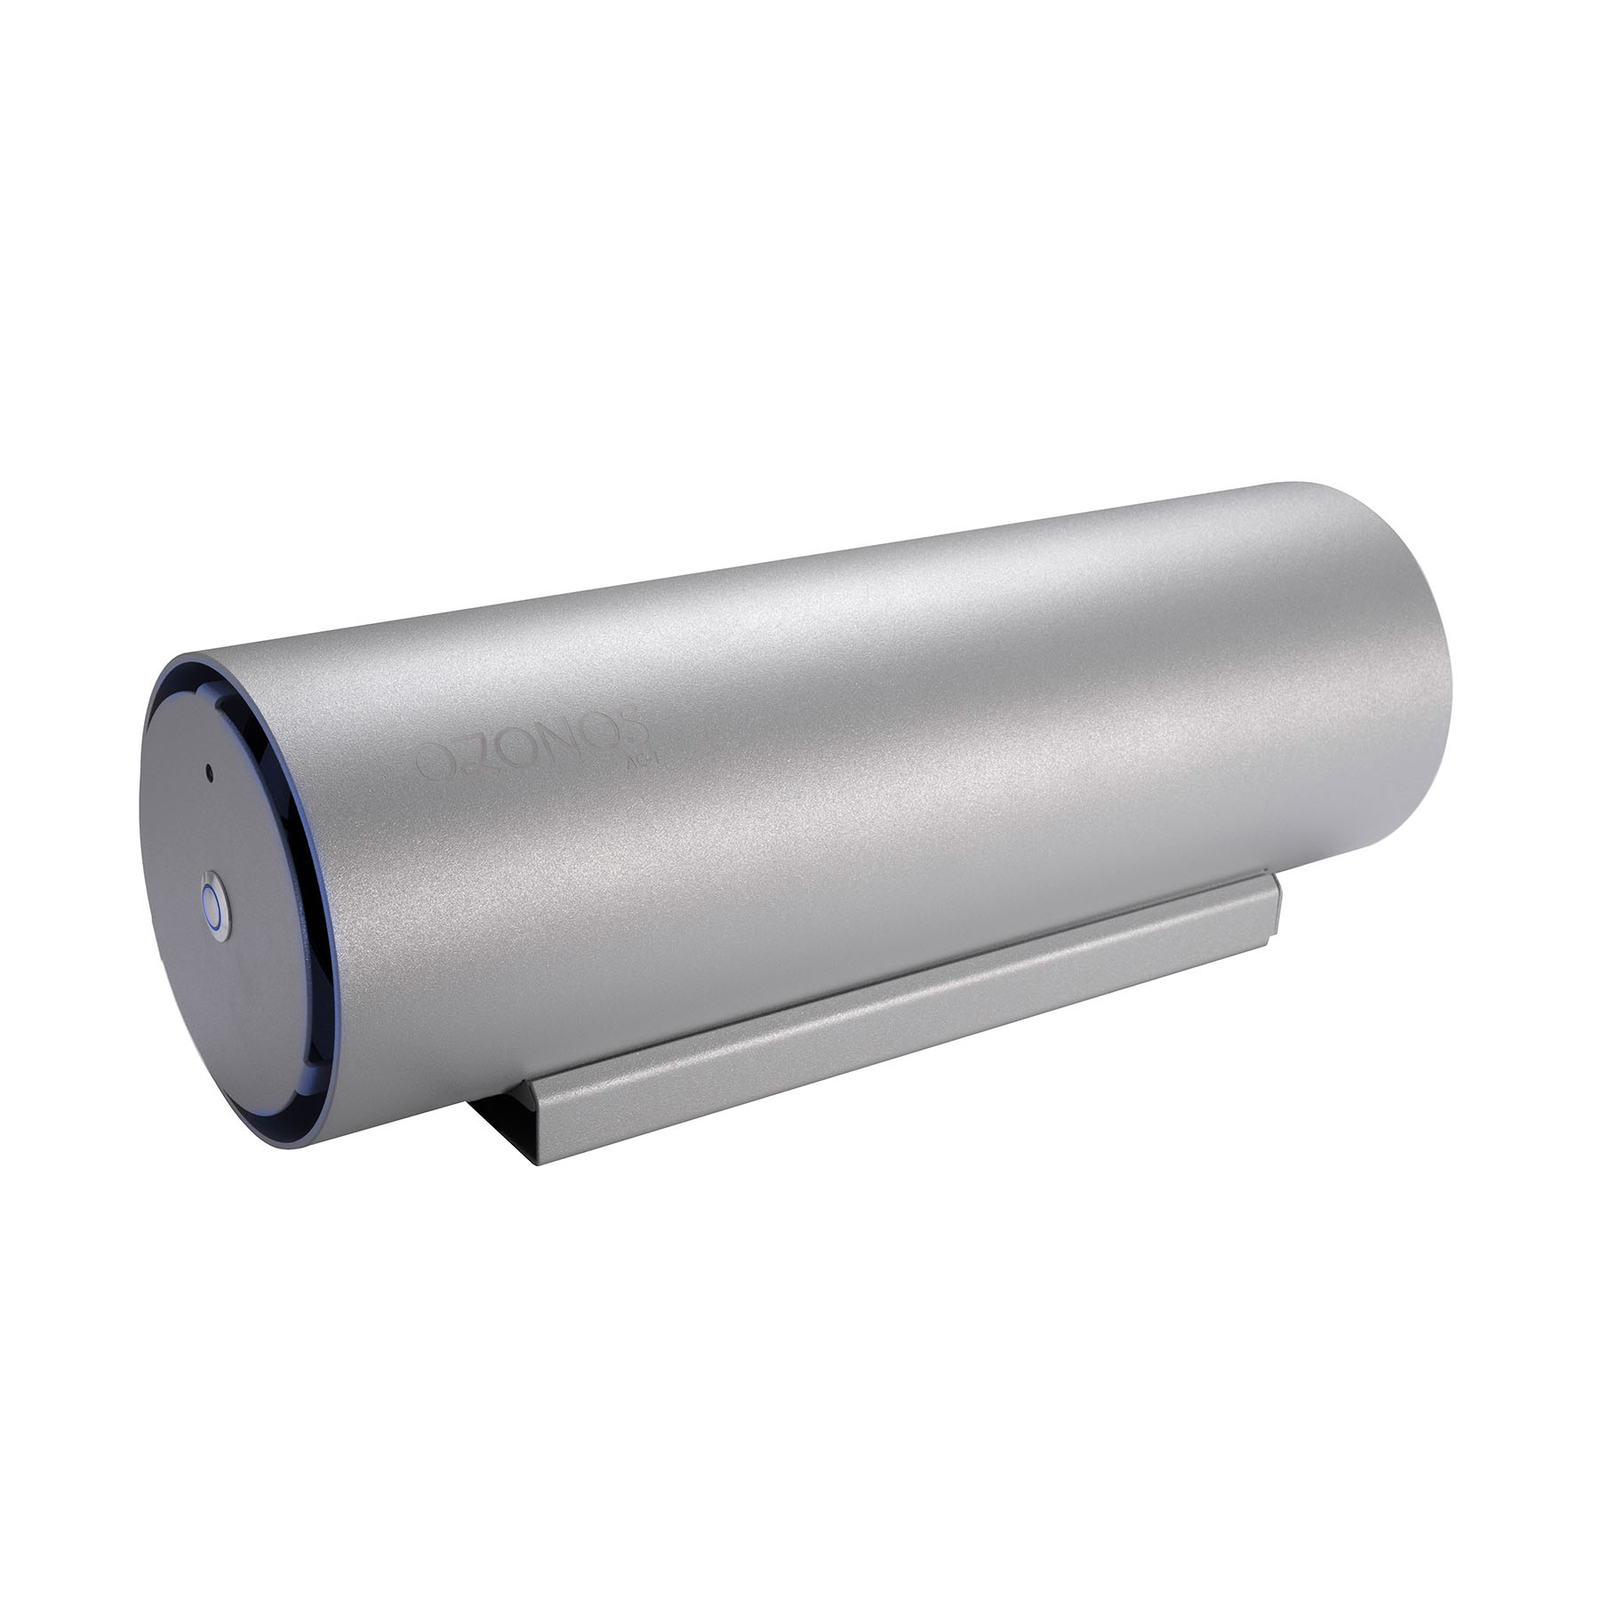 Ozonos AC-1 Plus air purifier, 0.115 ppm O3 silver